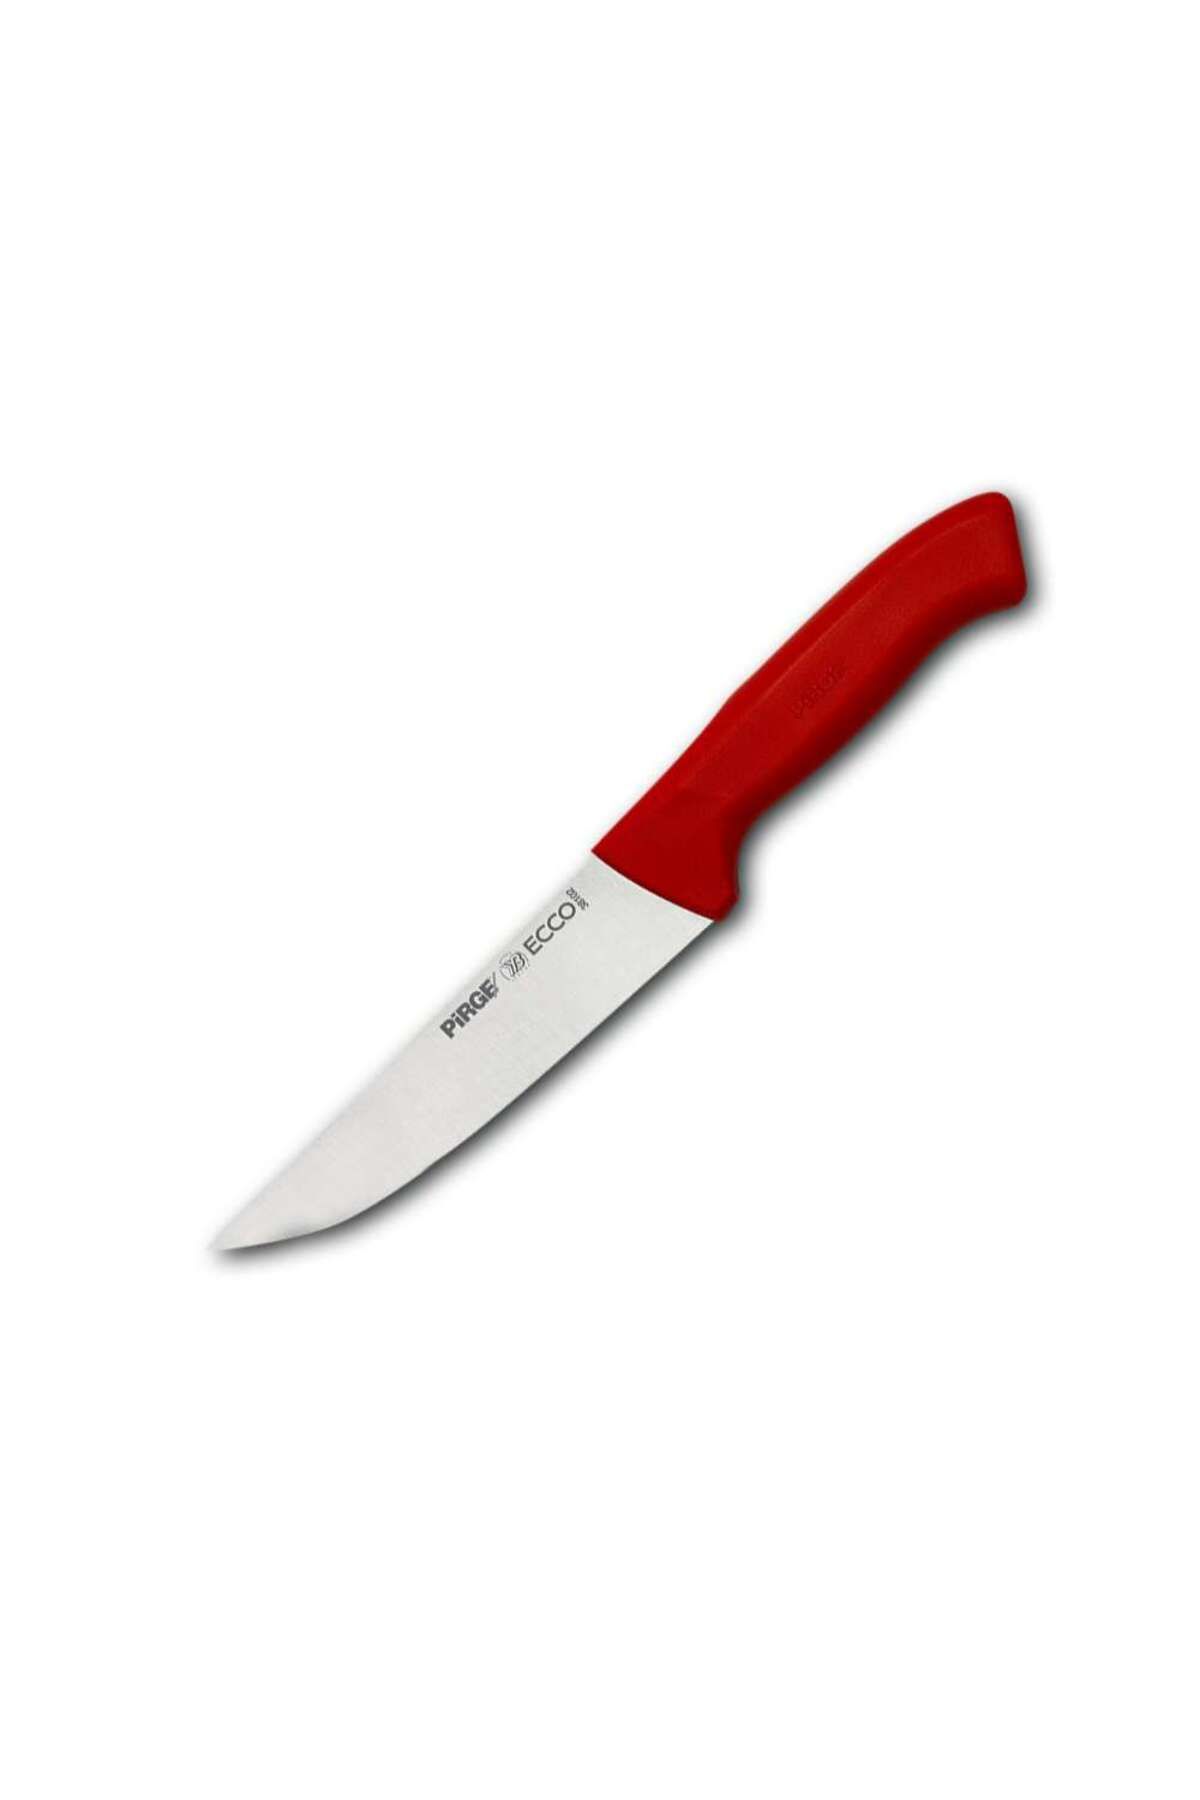 Pirge Ecco Kasap Bıçağı No.2 16,5 cm BEYAZ - 38102